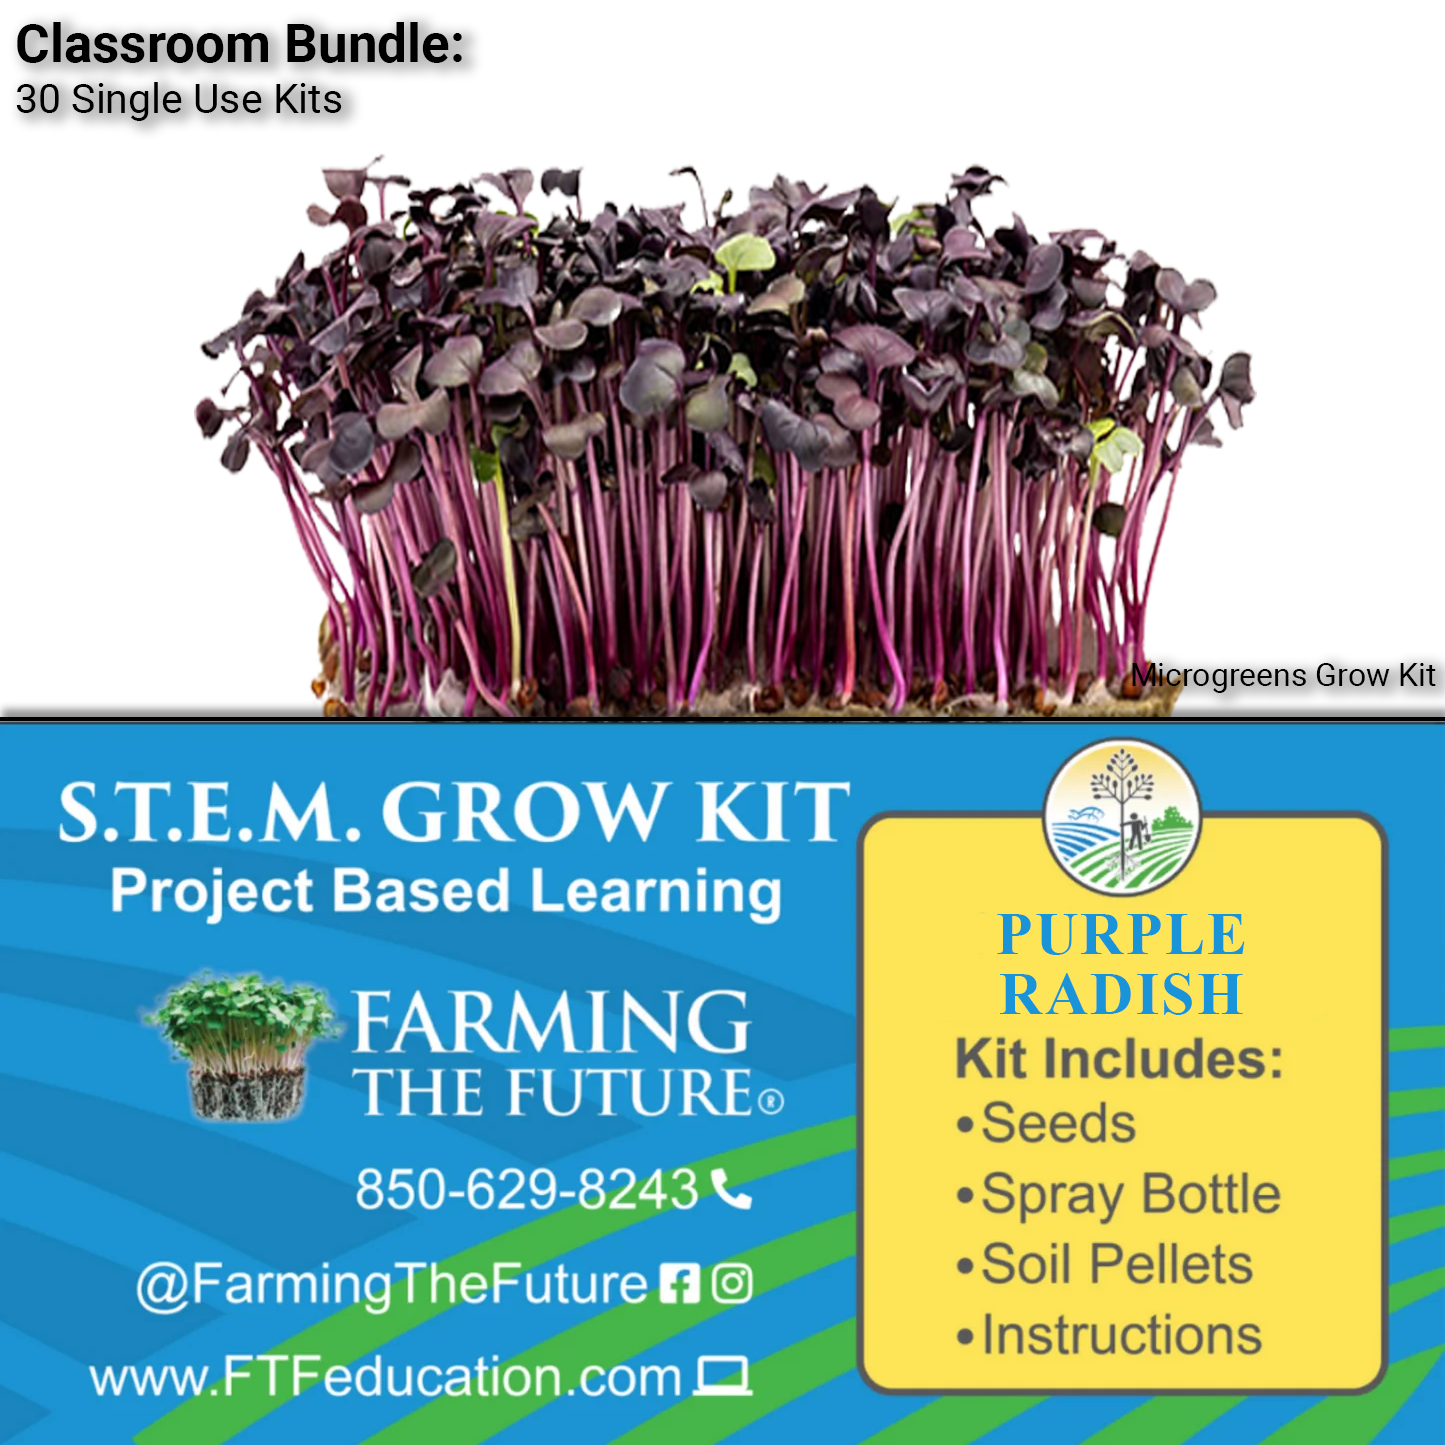 K-12 STEM Student Purple Radish Microgreen Kit - Classroom Bundle